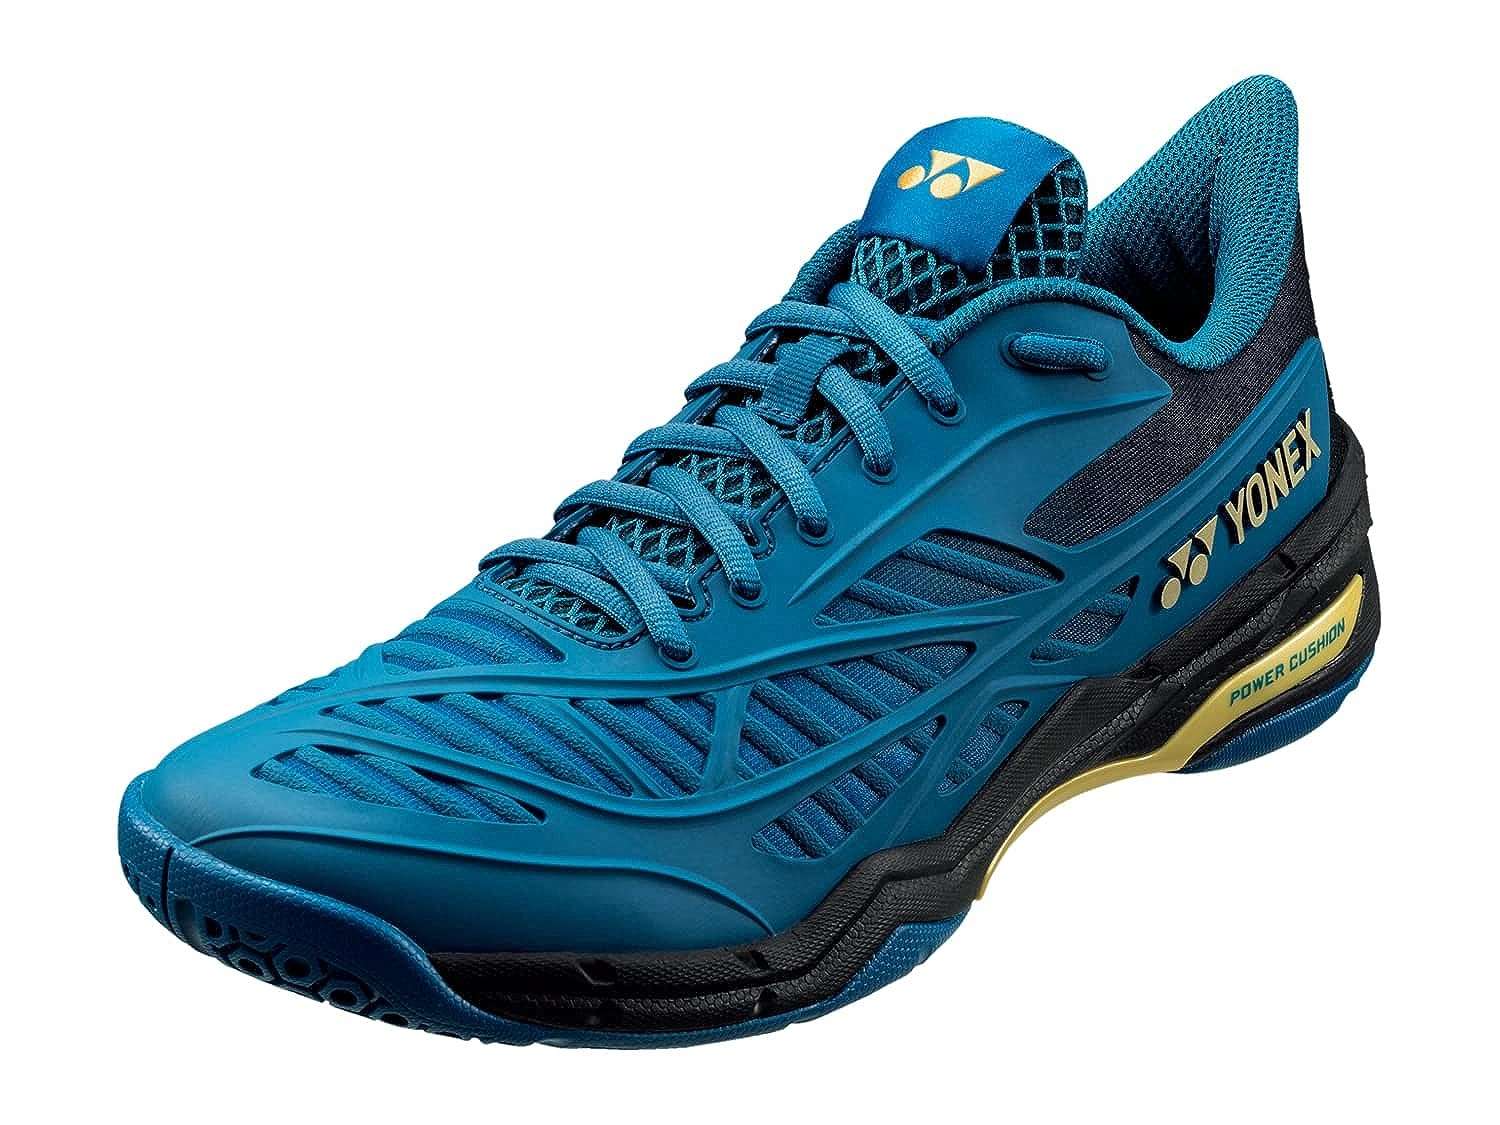 Yonex Power Cushion Cascade Drive Badminton Shoes-7-TEAL BLUE-3